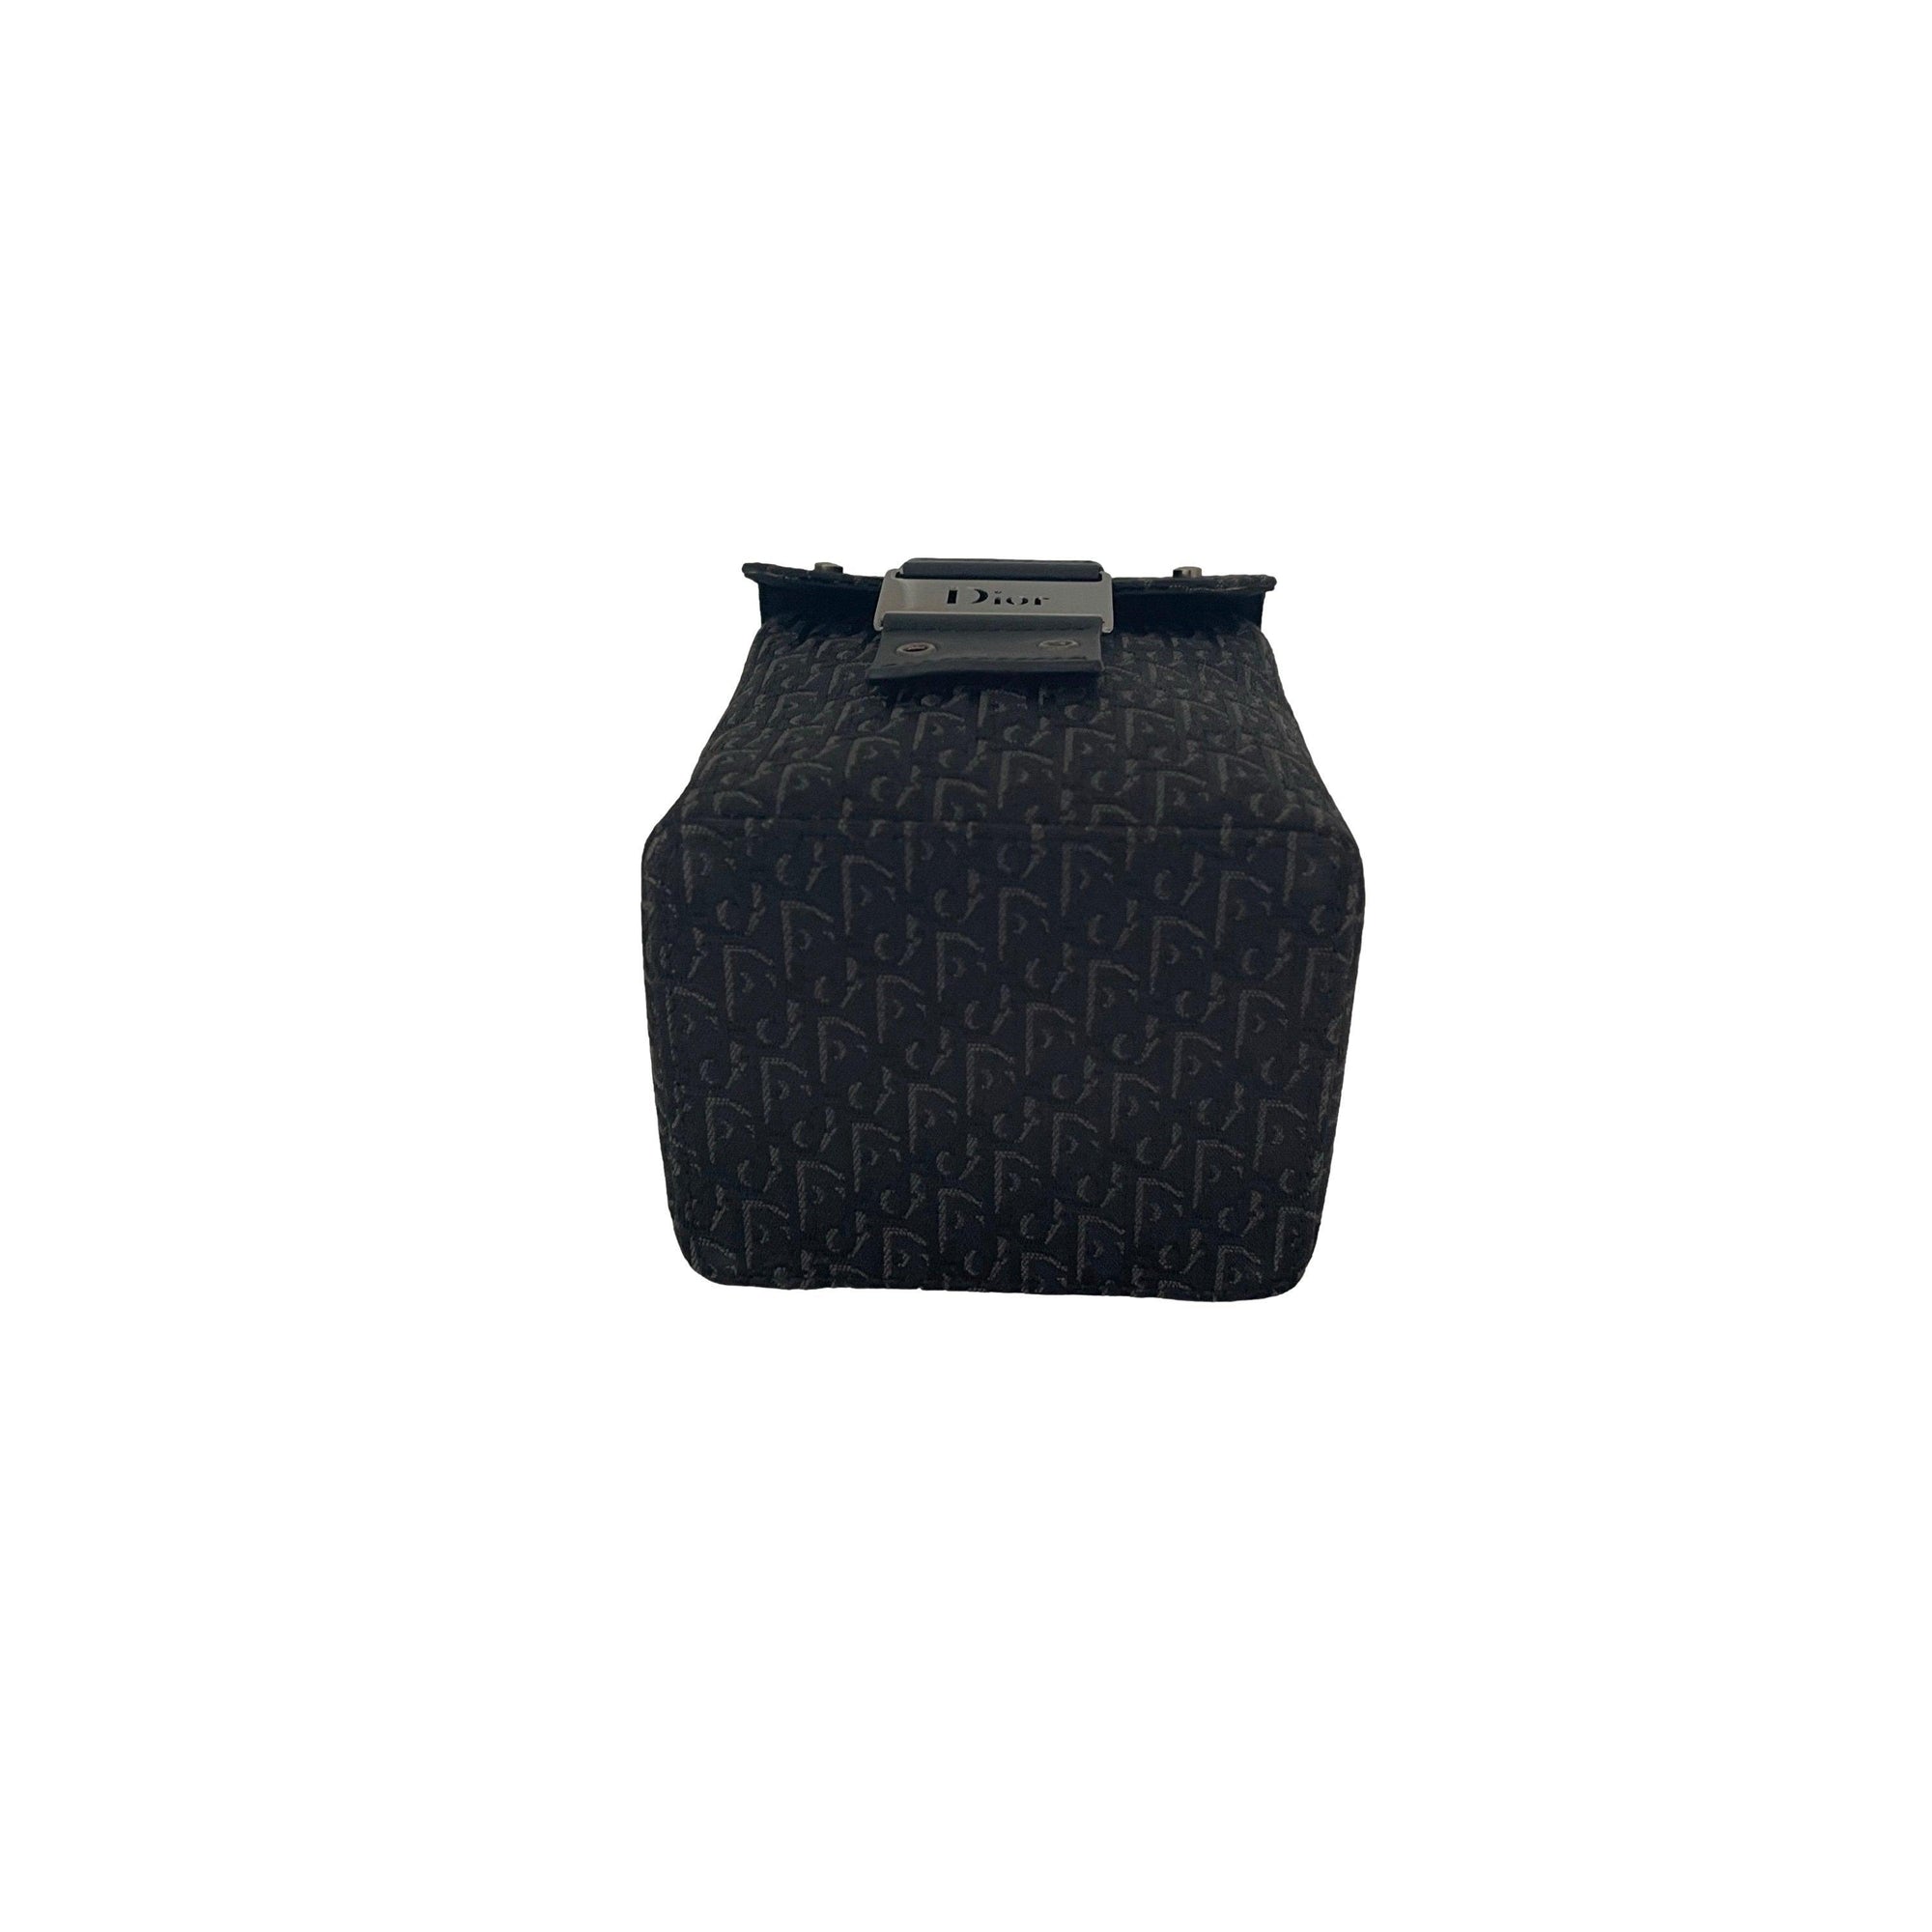 Dior Black Mini Logo Box Bag - Handbags